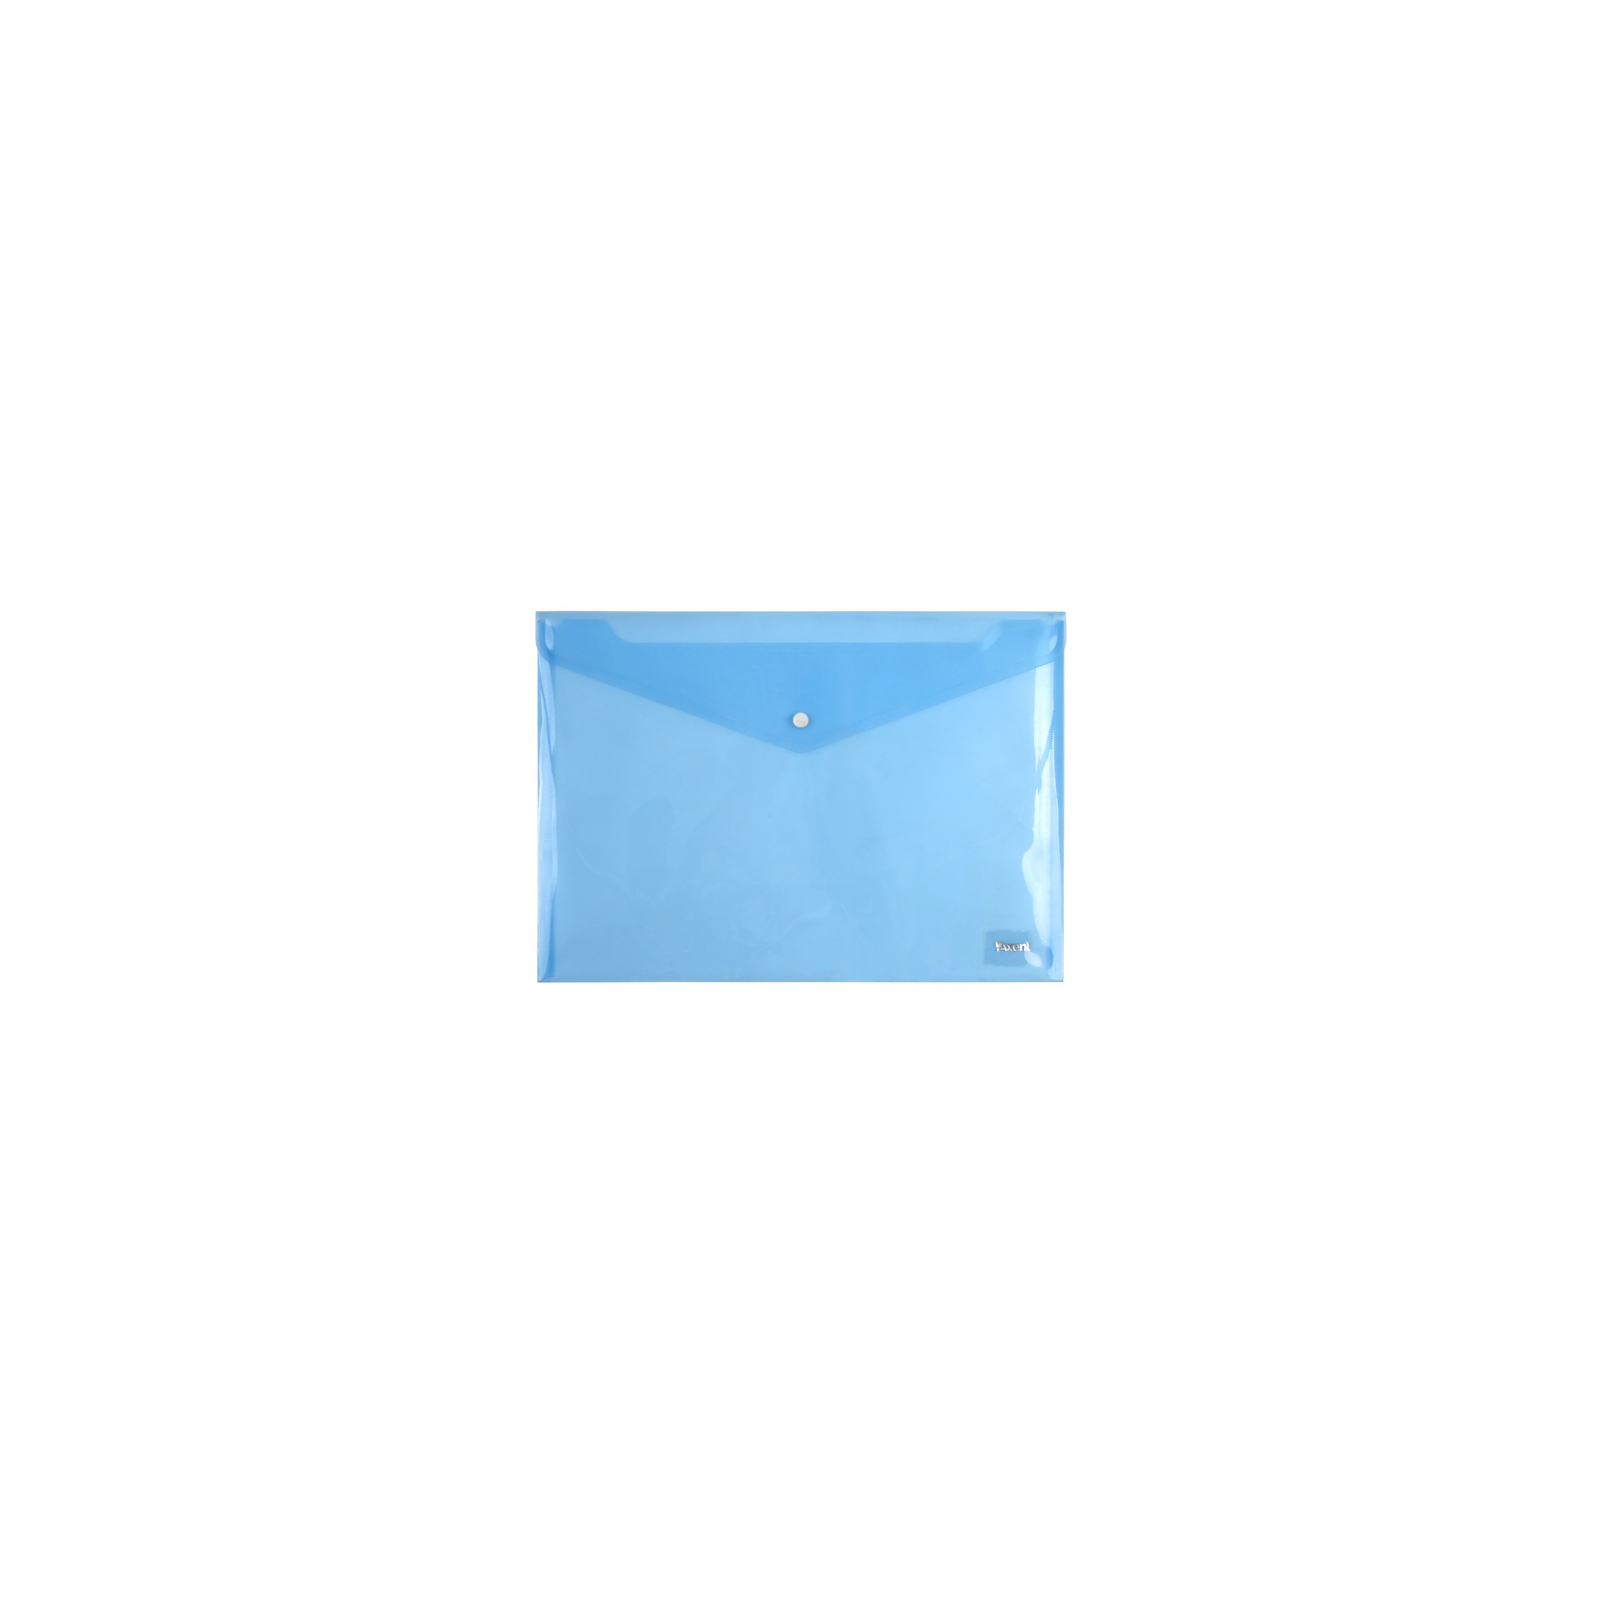 Папка - конверт Axent А4, glossy, blue (1402-22-А)